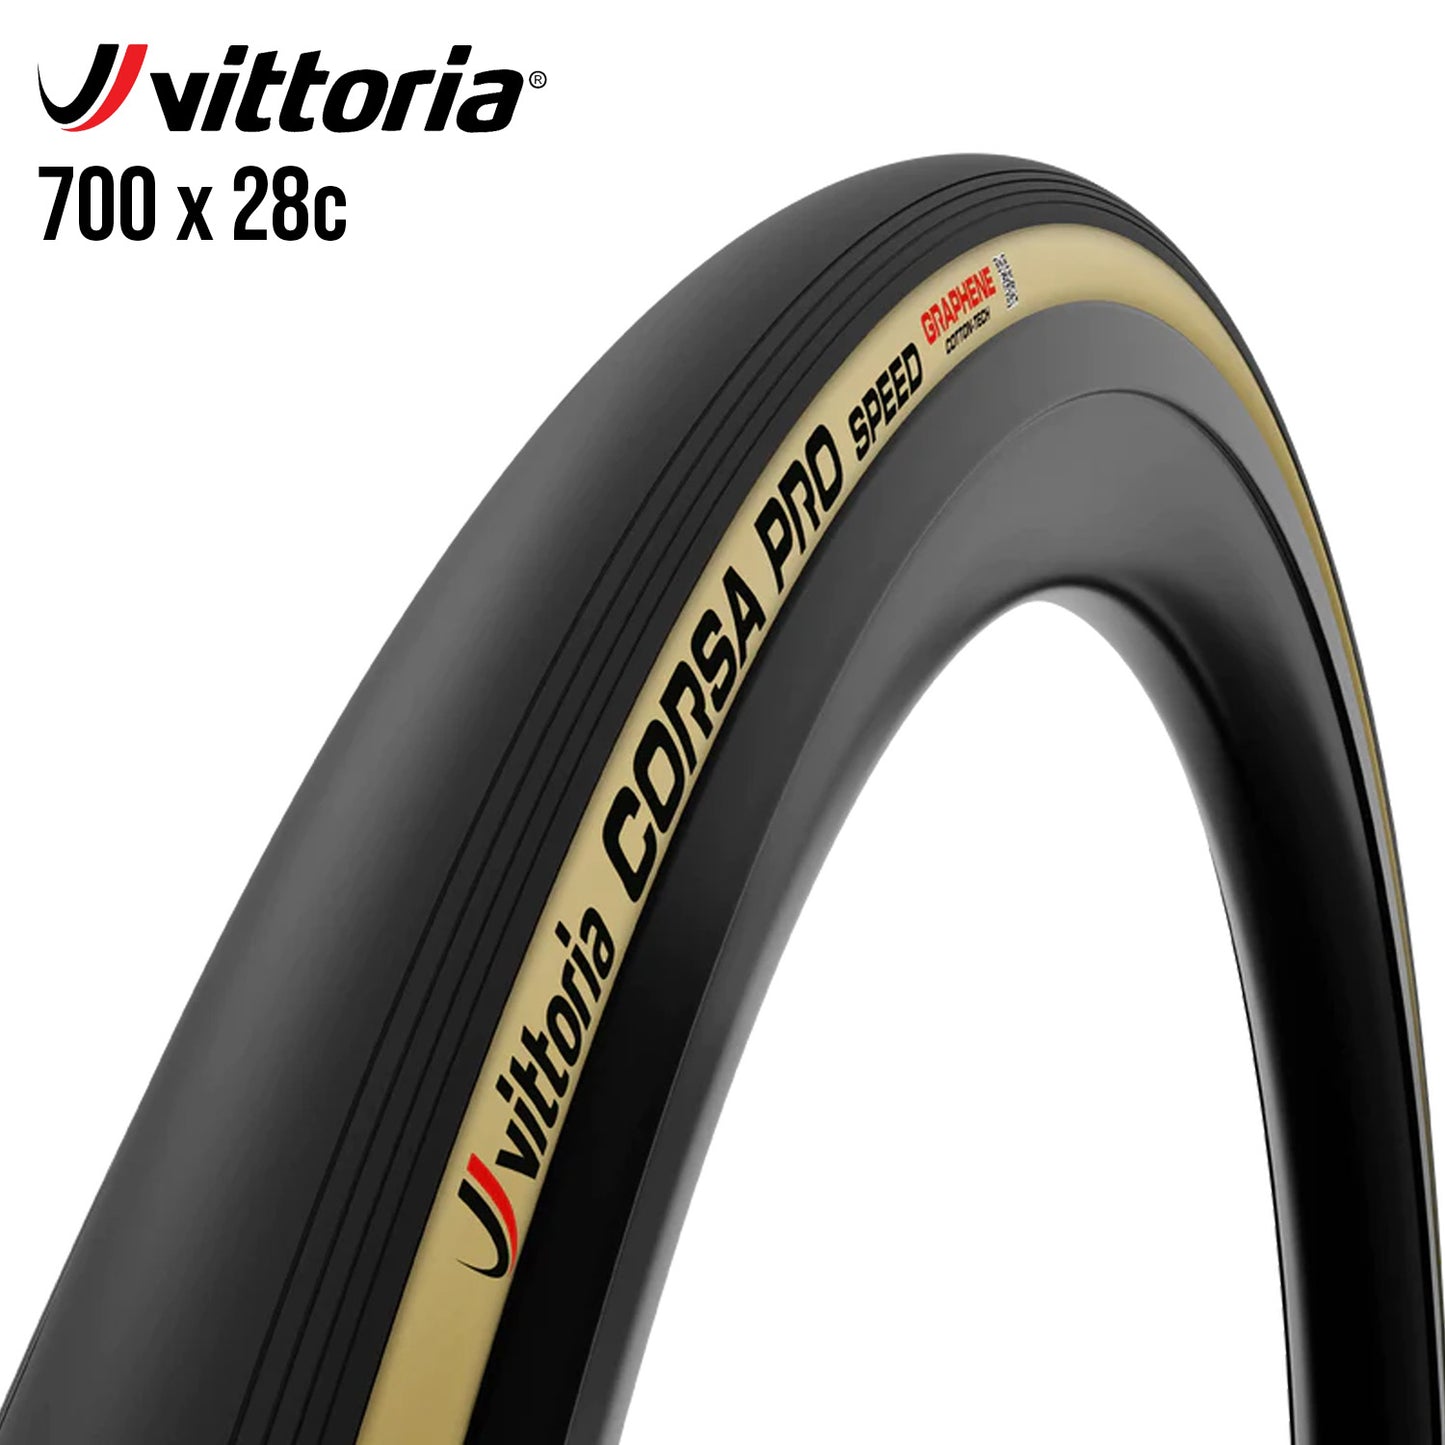 Vittoria Corsa Pro Speed Road Tubeless-Ready Bike Tire - Tan